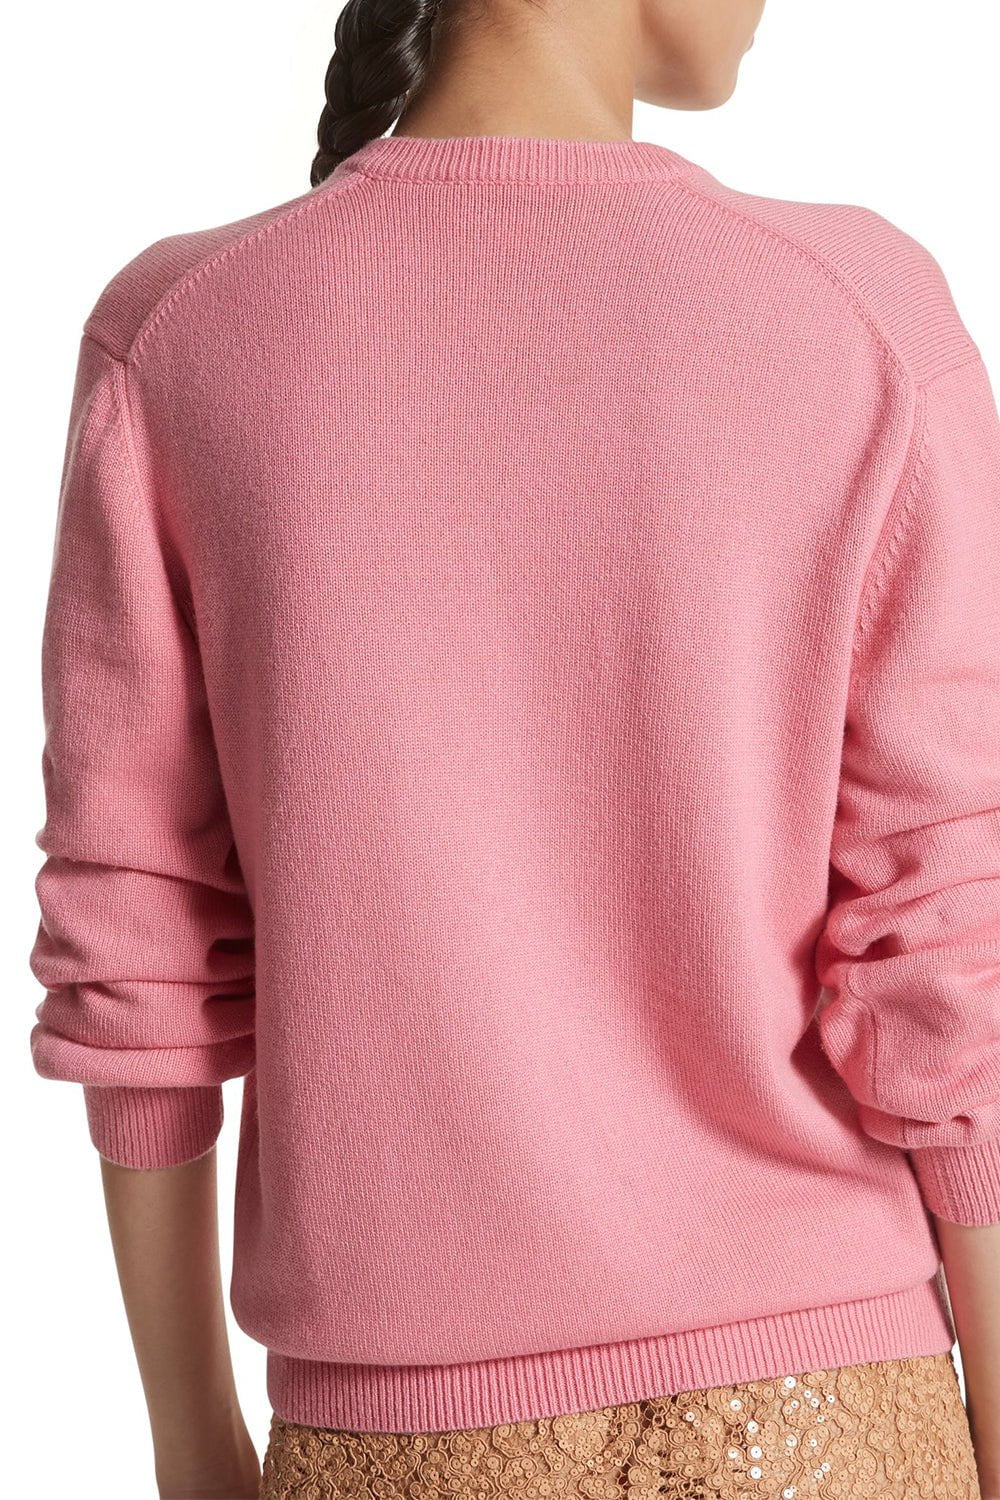 MICHAEL KORS-Crushed Sleeve Sweater - Geranium-